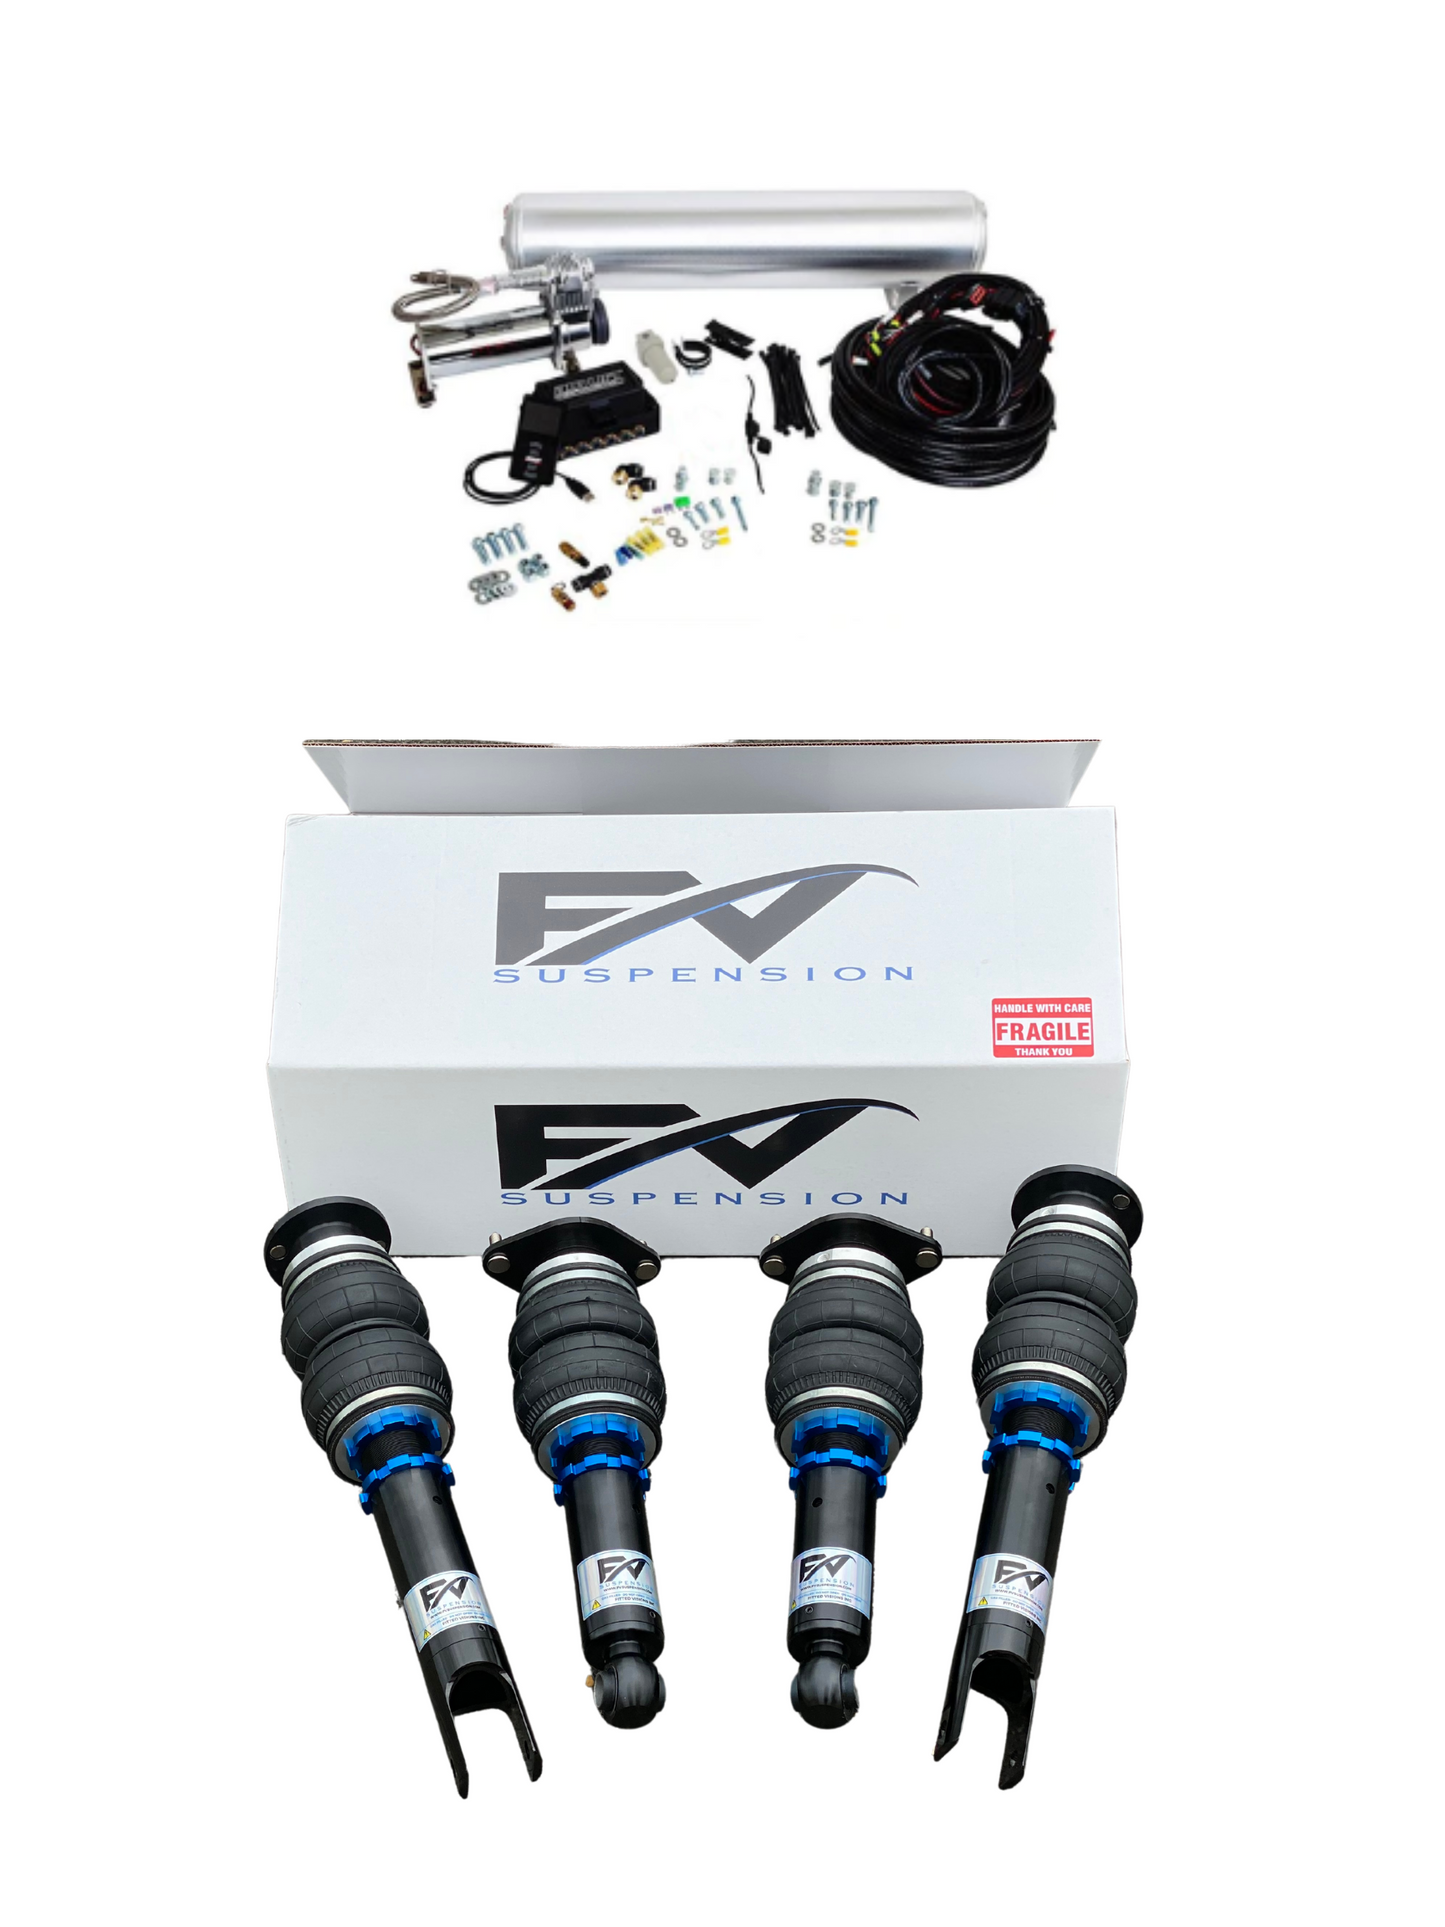 FV Suspension 3P Tier 2 Complete Air Ride kit for 09-14 Acura TSX - FVALtier2kit17